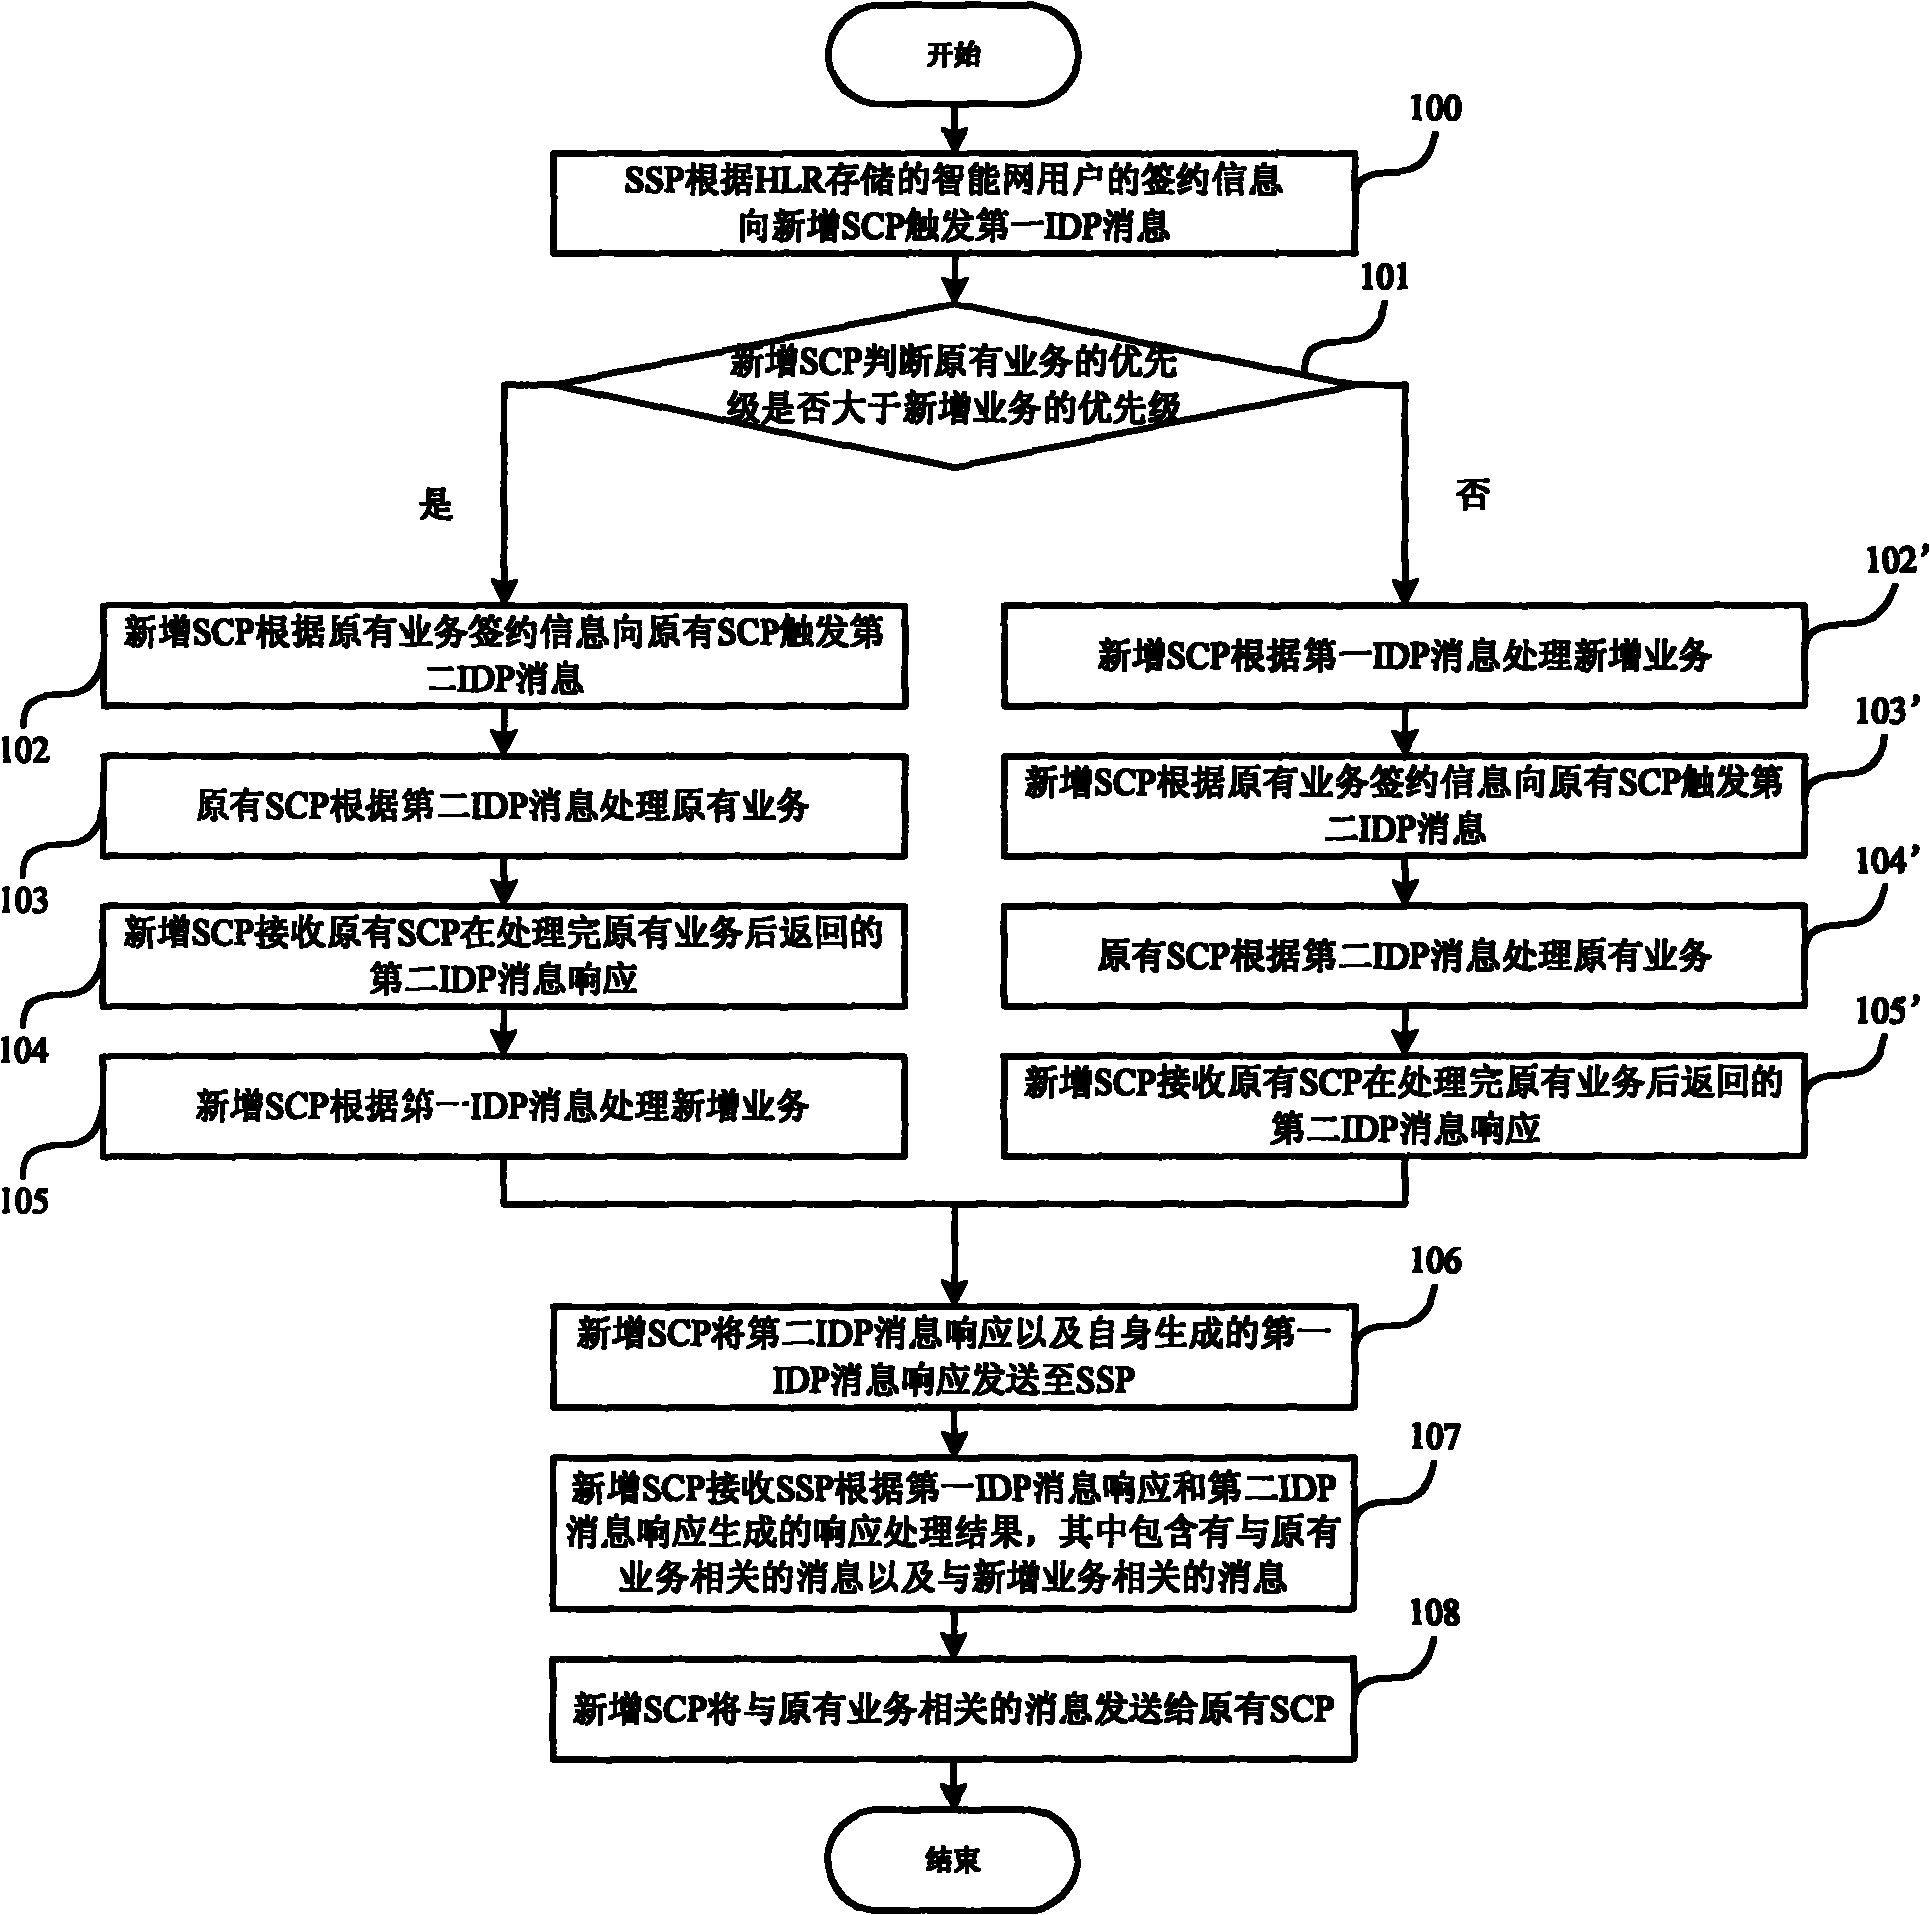 Method for processing multi-service nesting of intelligent network